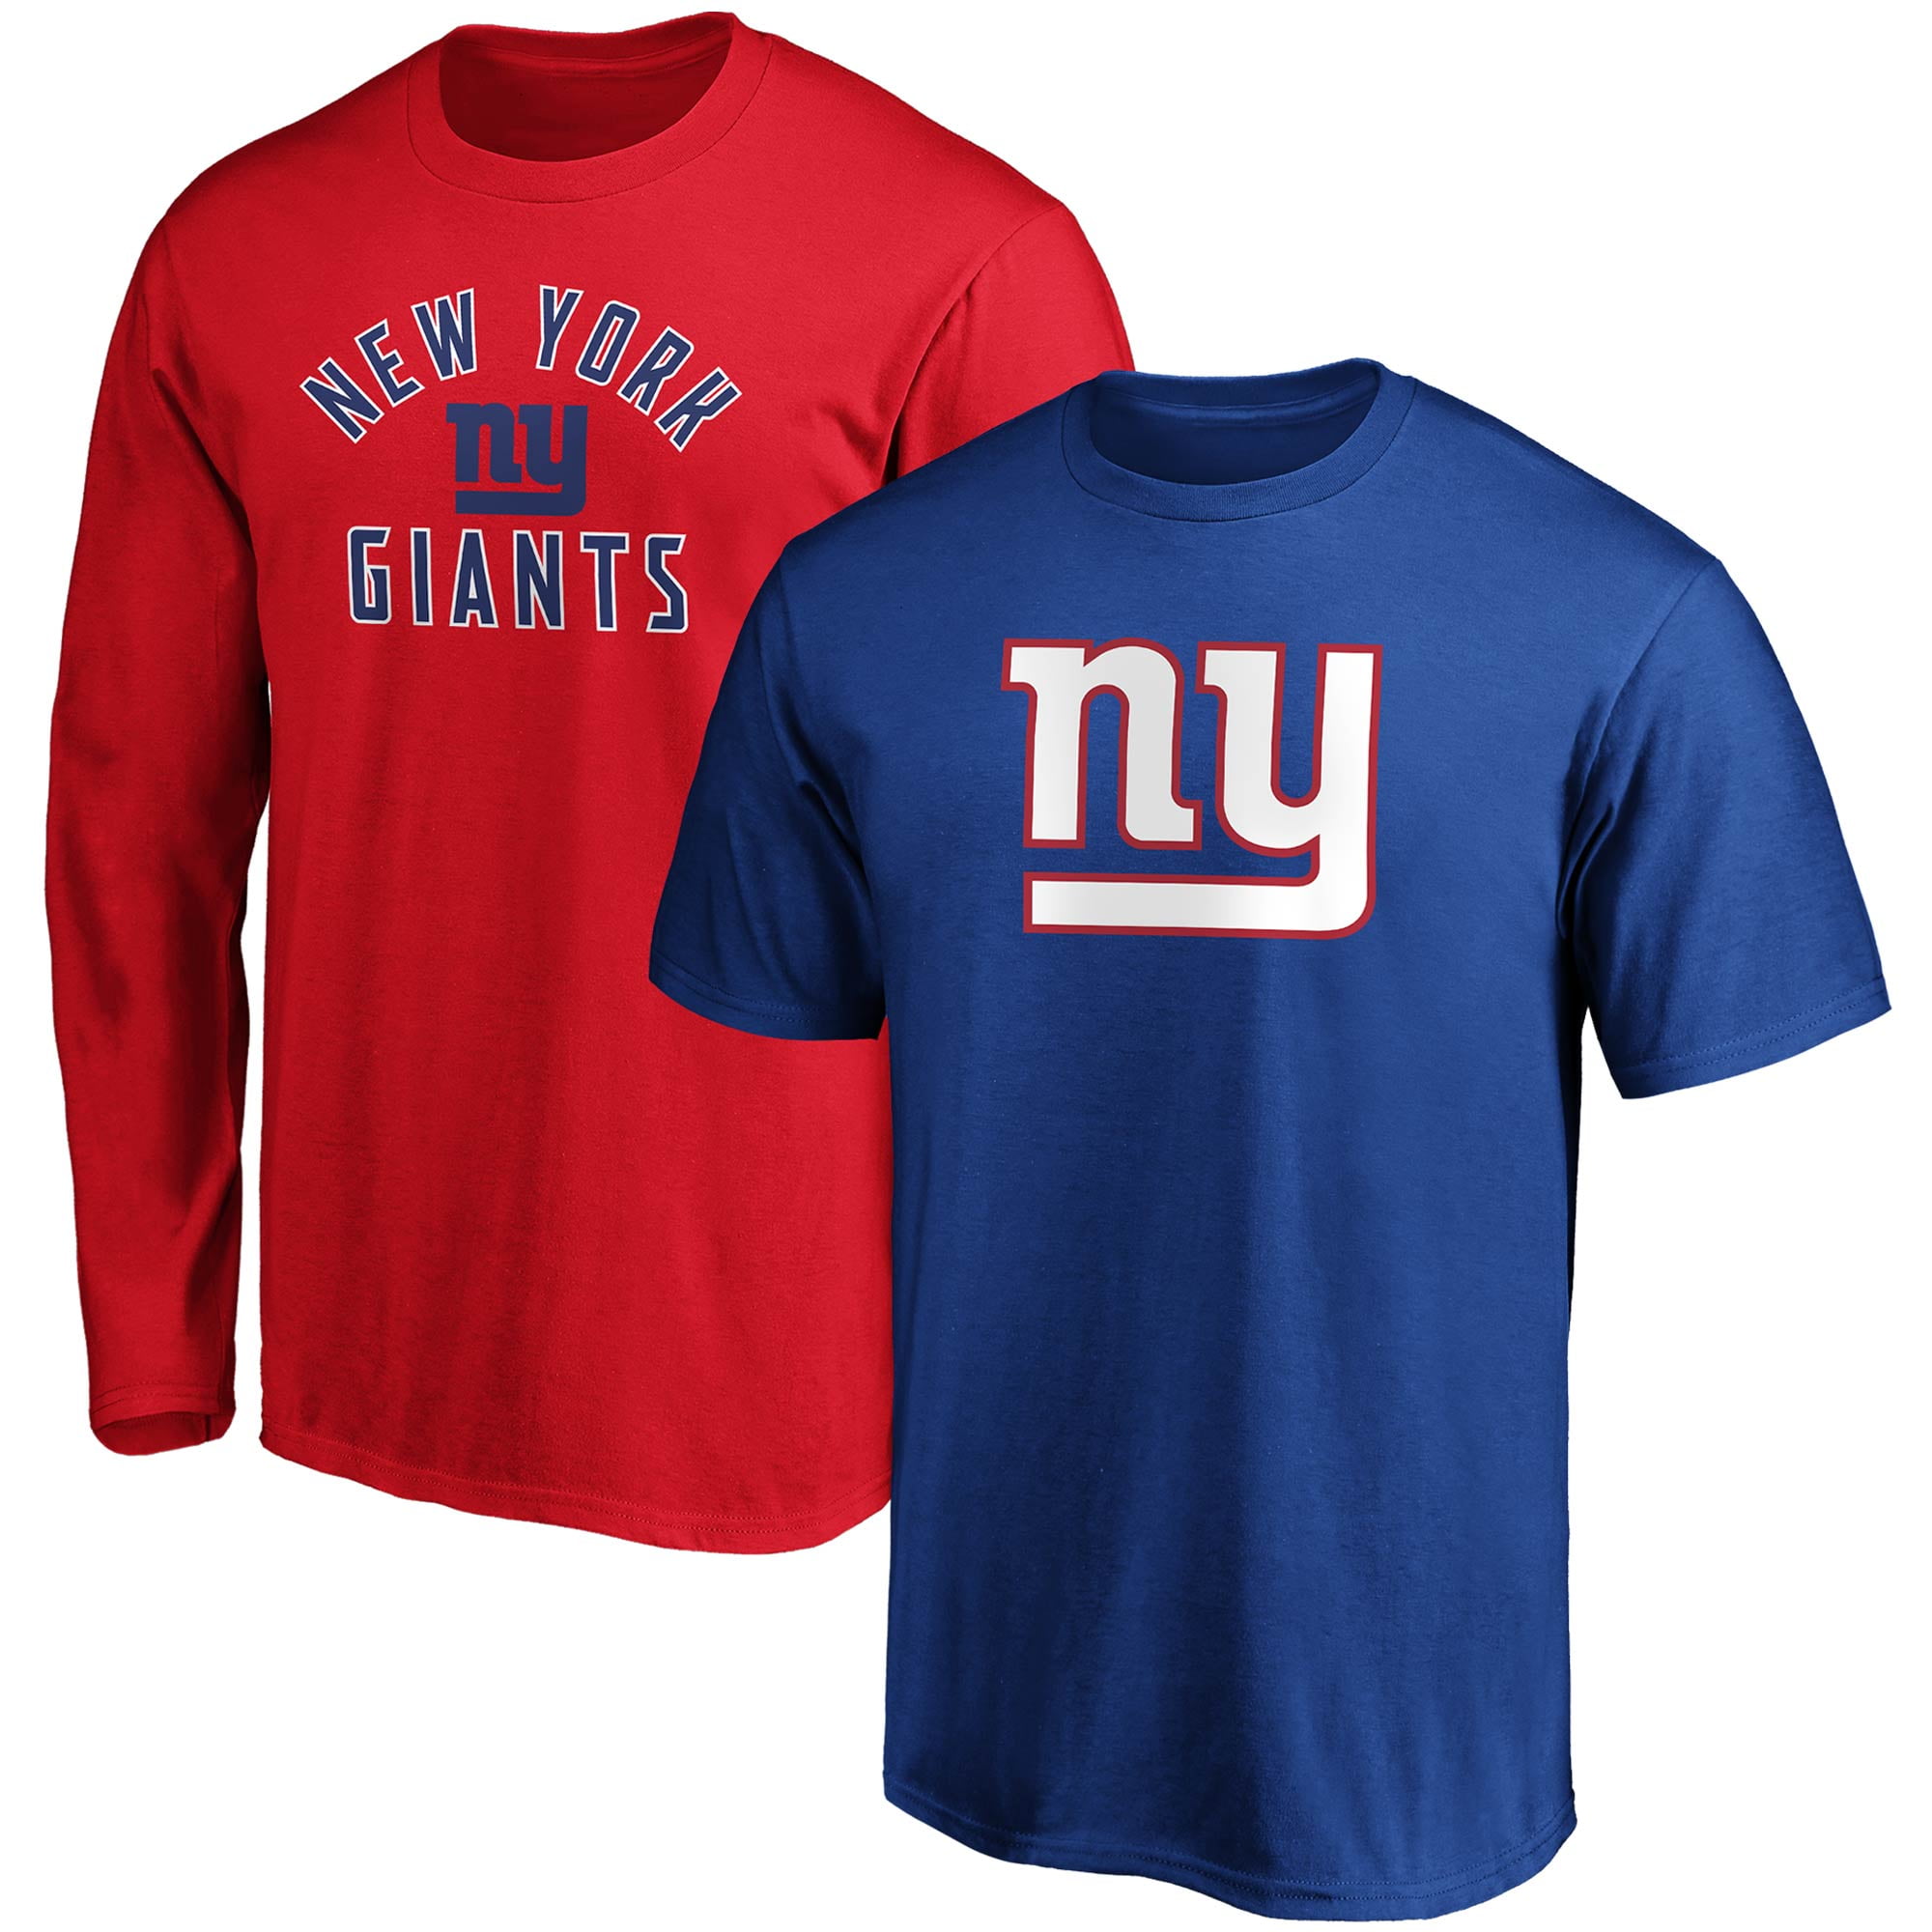 new york giants men's t shirts